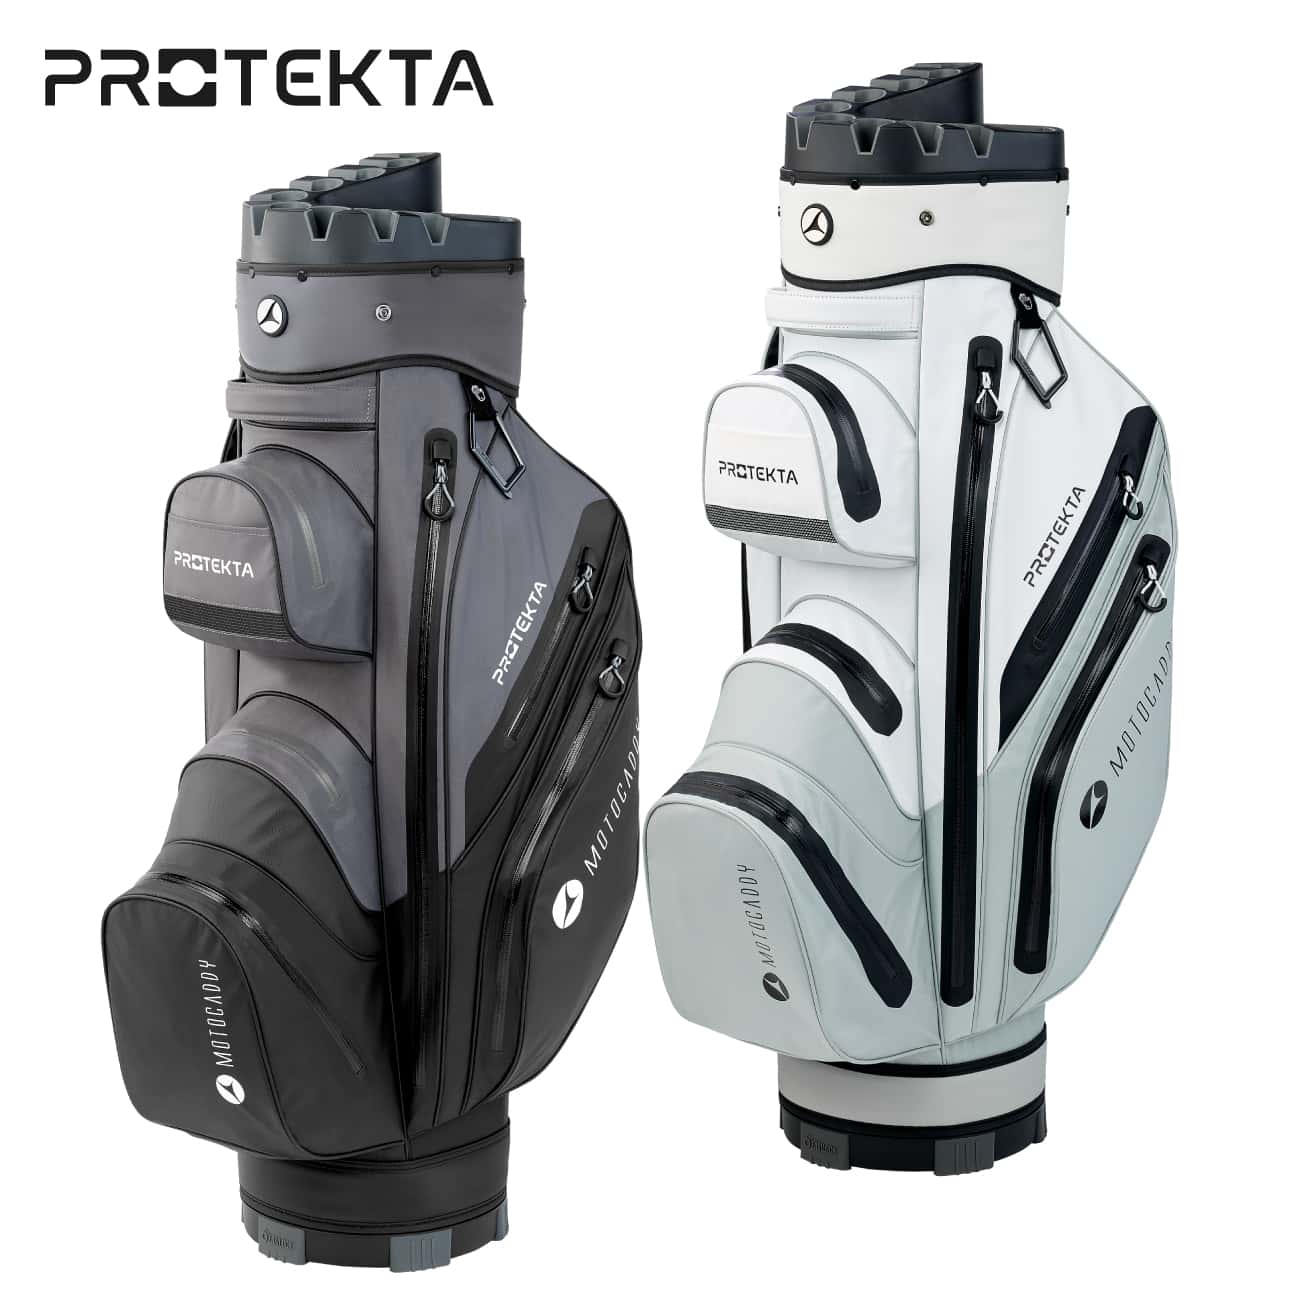 Motocaddy Protekta golf bag. Protect your clubs